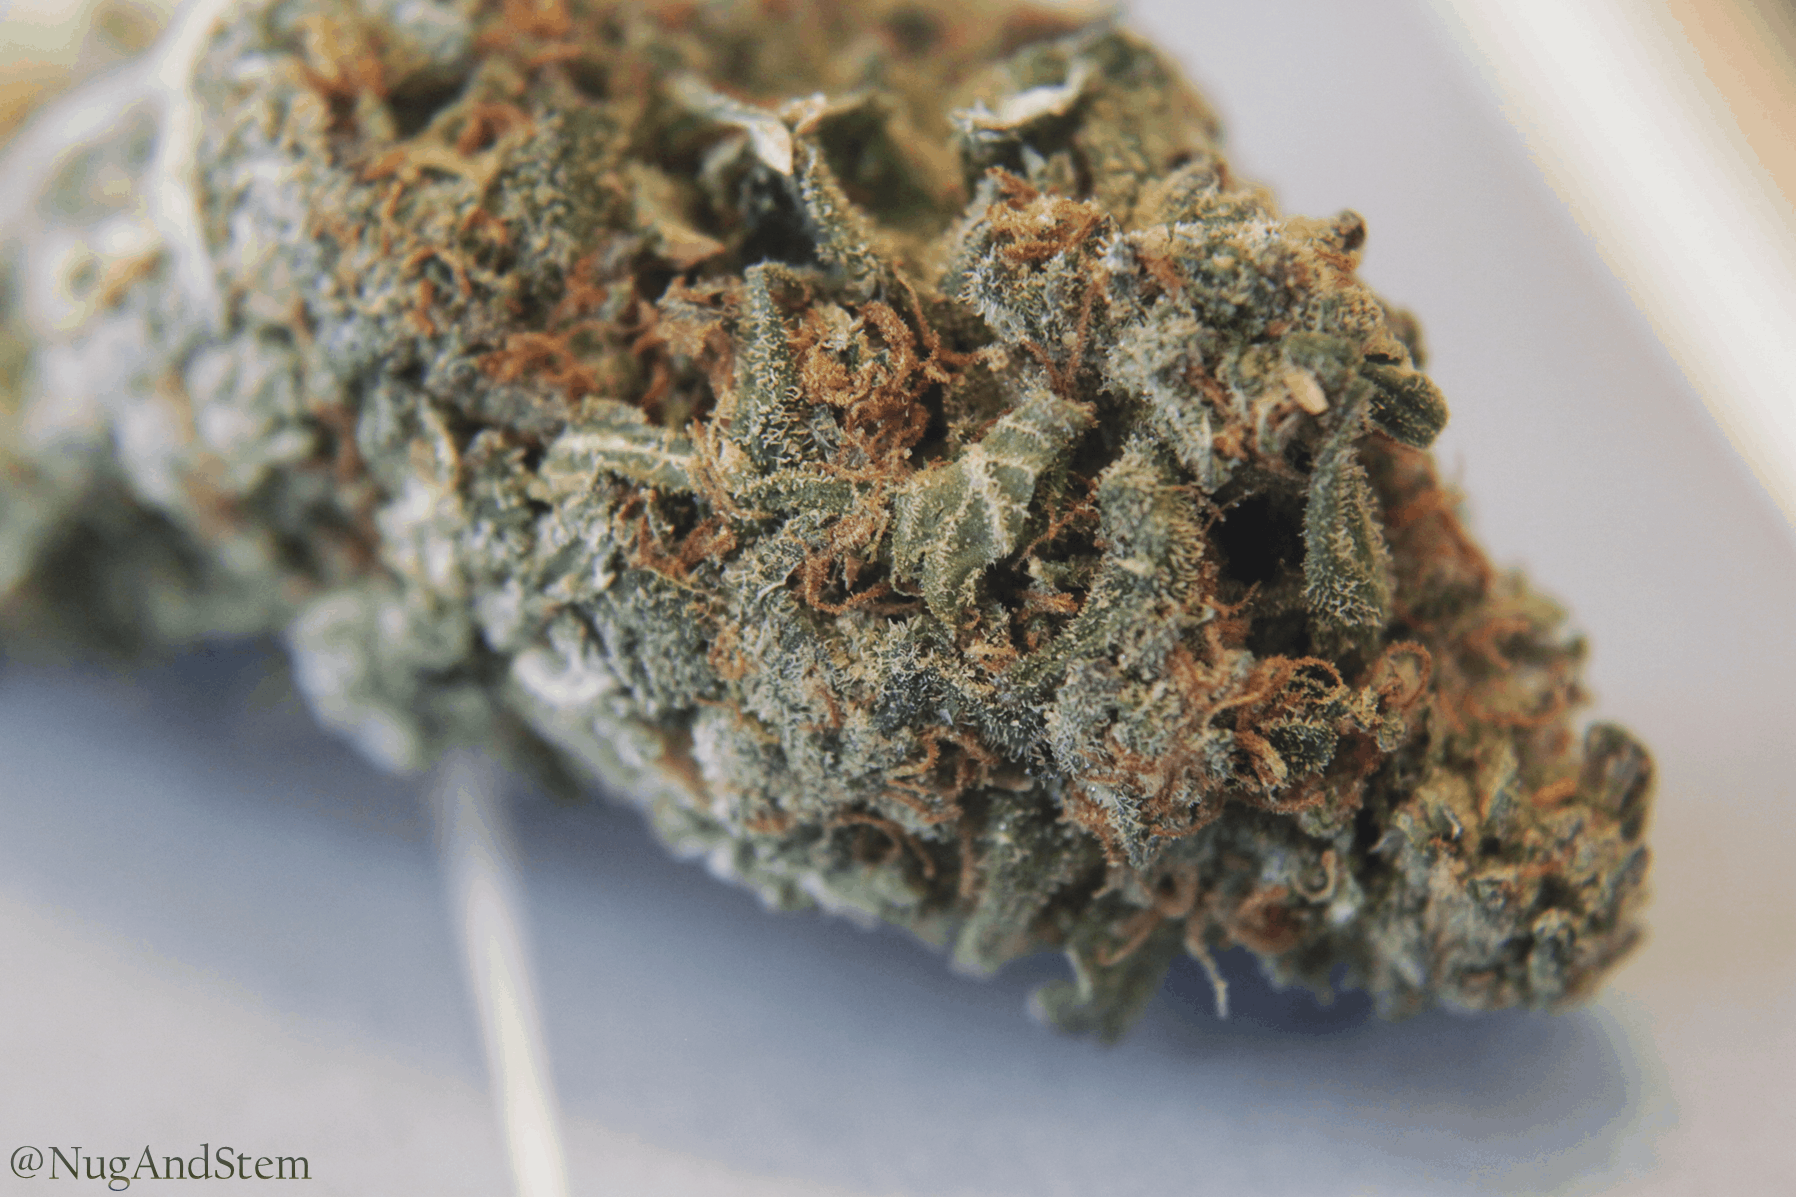 Evergreen Medicinal Review - Save On Cannabis Mail Order Marijuana Canada Monster OG